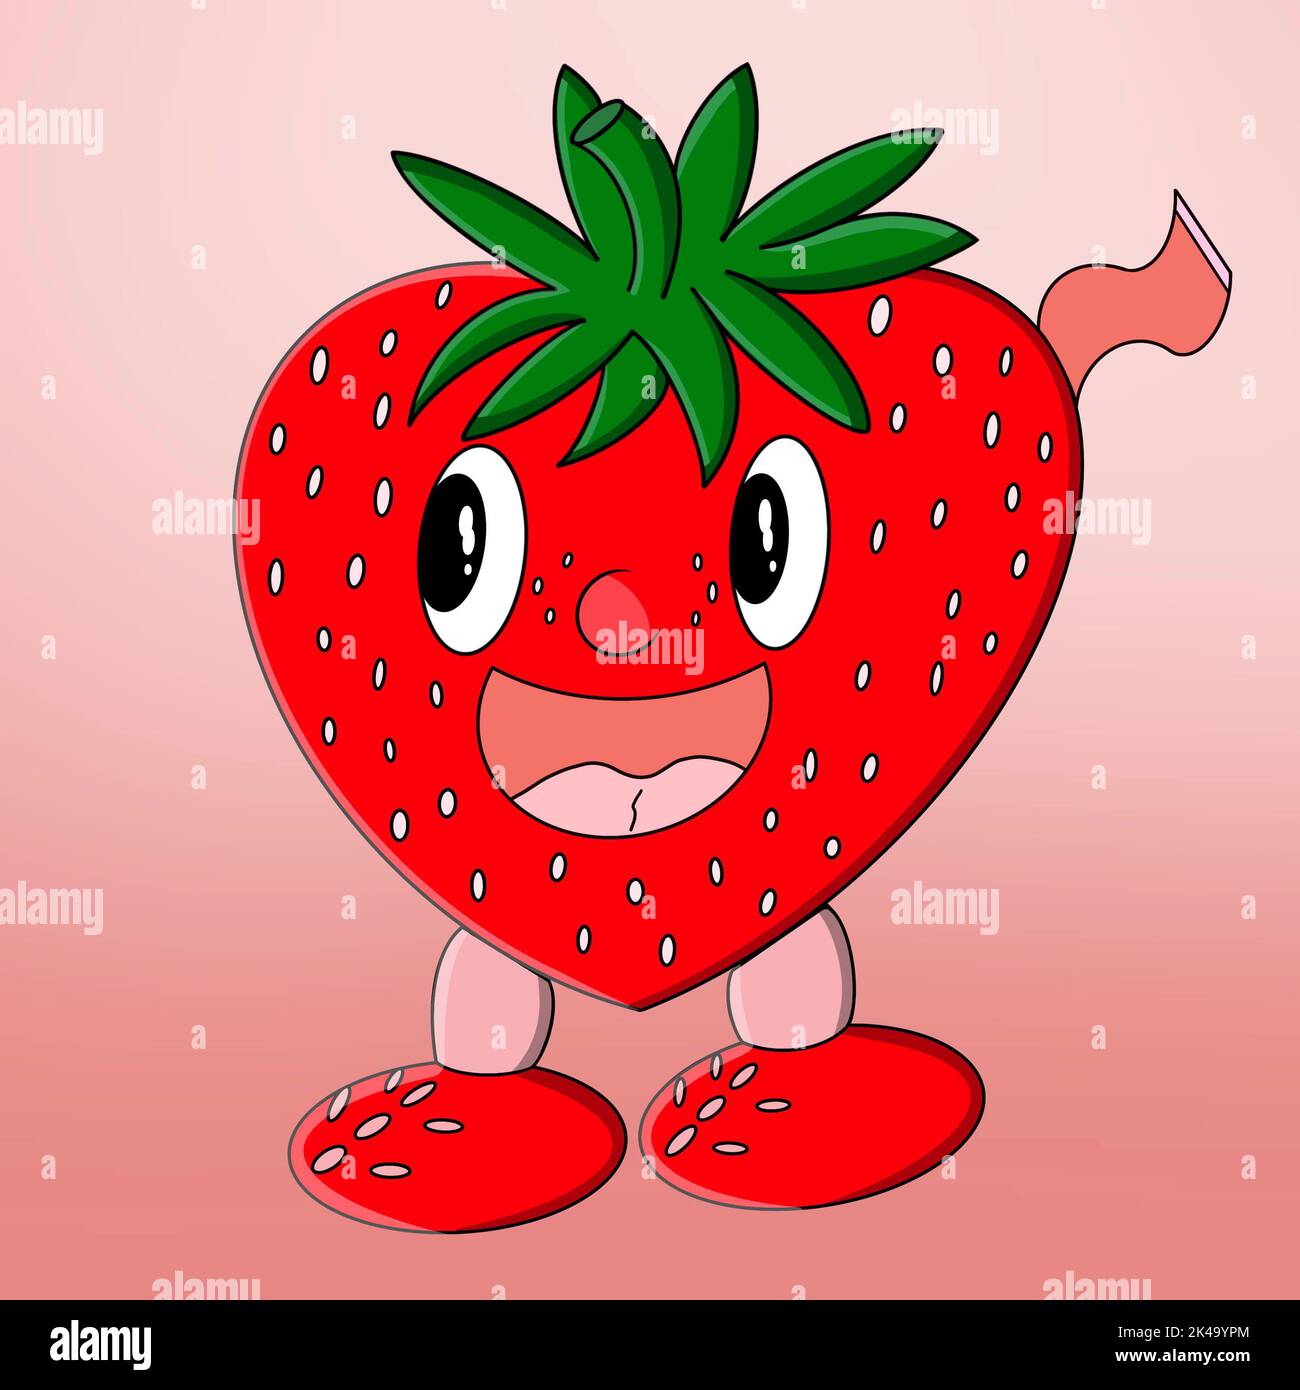 Strawberry red cute cartoon vektor illustration Stock Photo